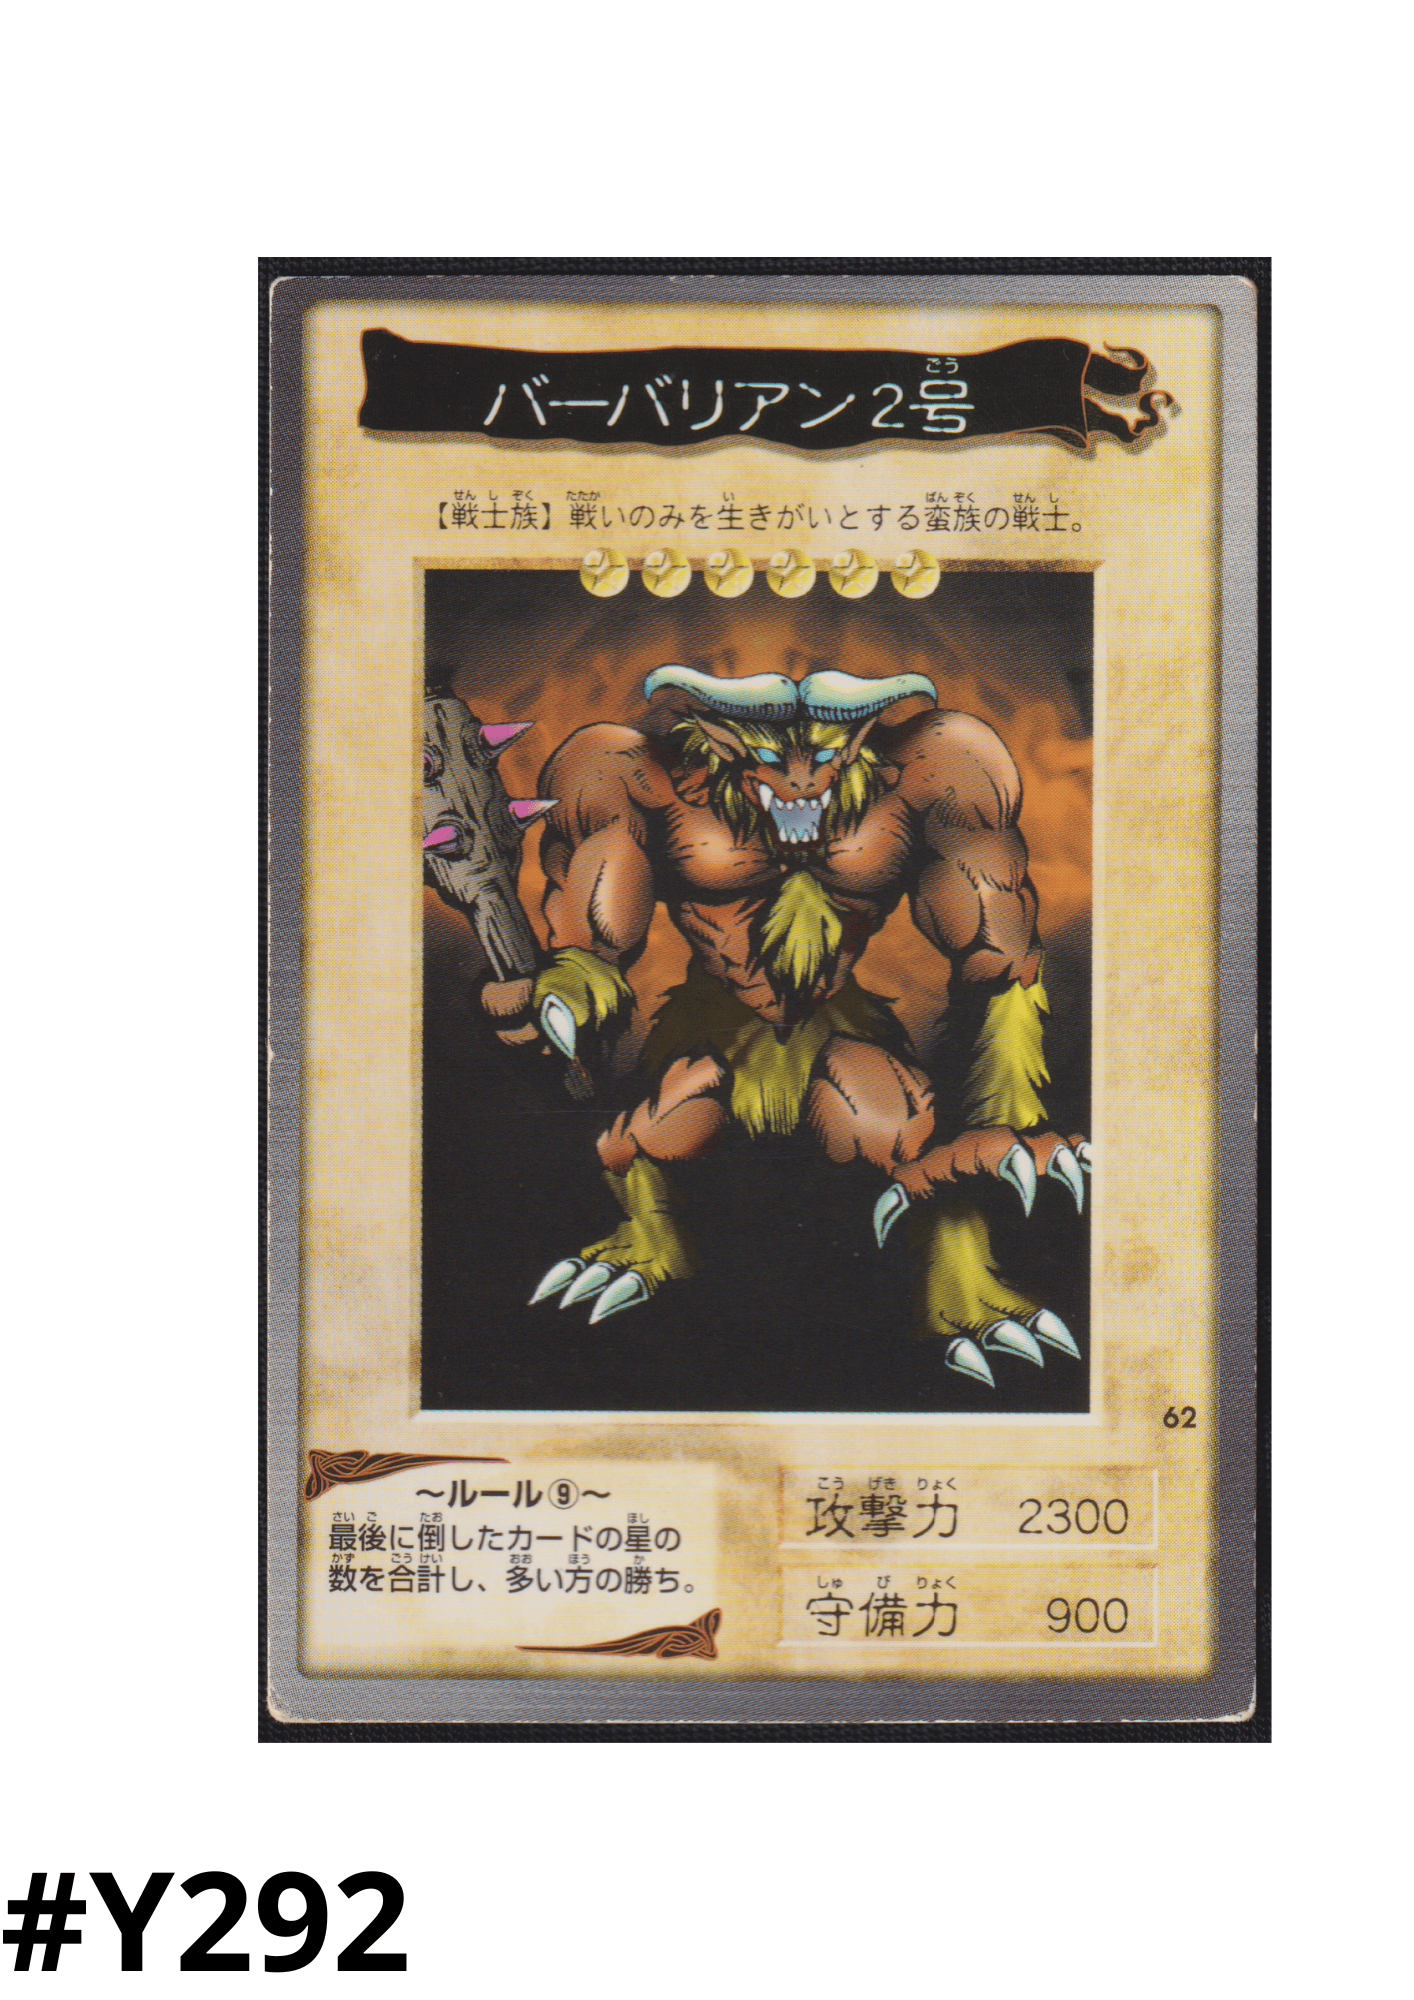 Yu Gi Oh! | Bandai Card No.62 | Swamp Battleguard ChitoroShop